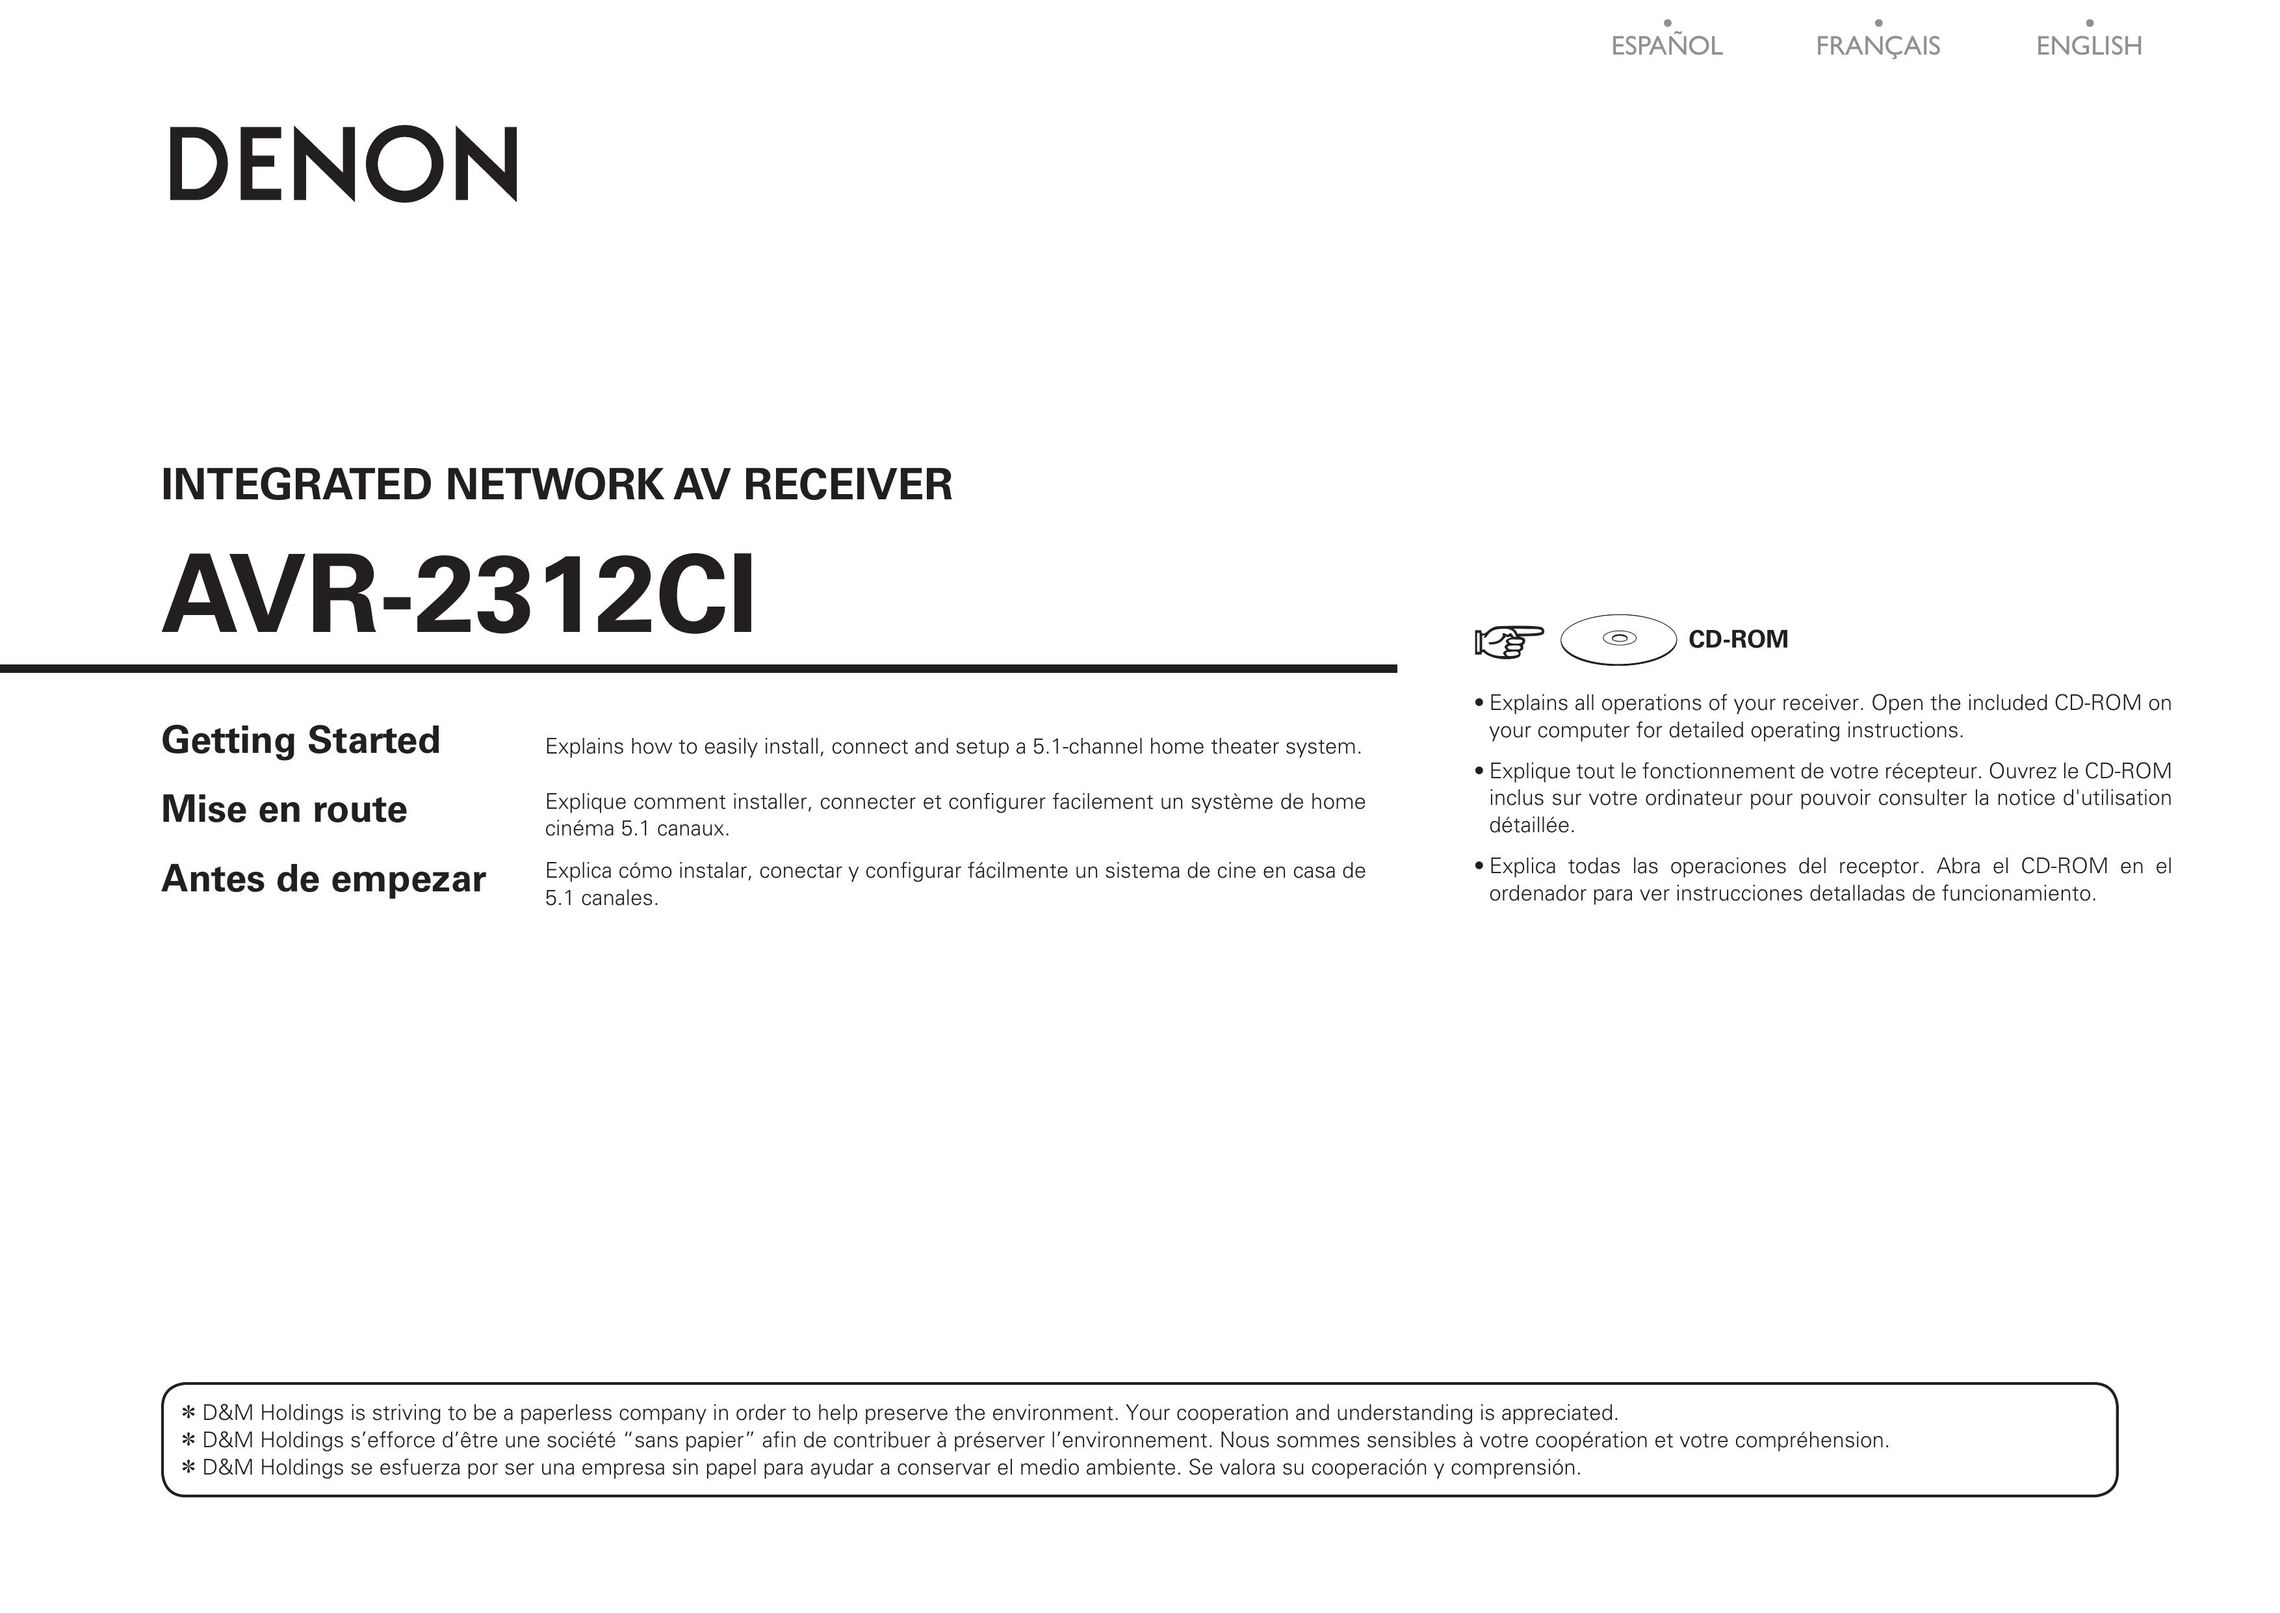 Denon AVR-2312CI Network Card User Manual